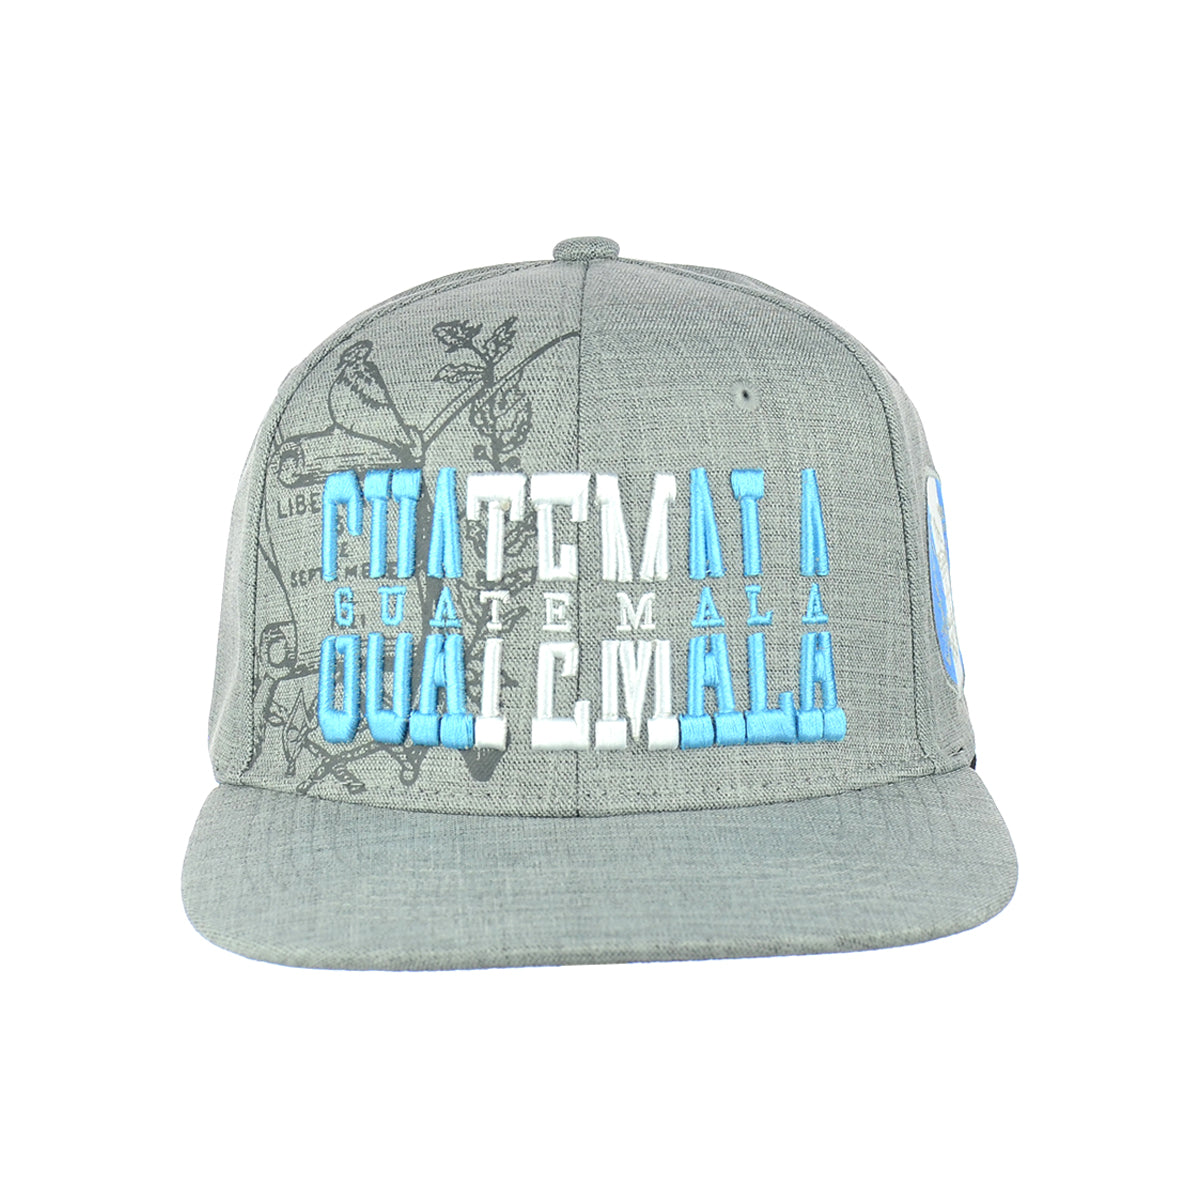 Guatemala Embroidered Snapback Hat